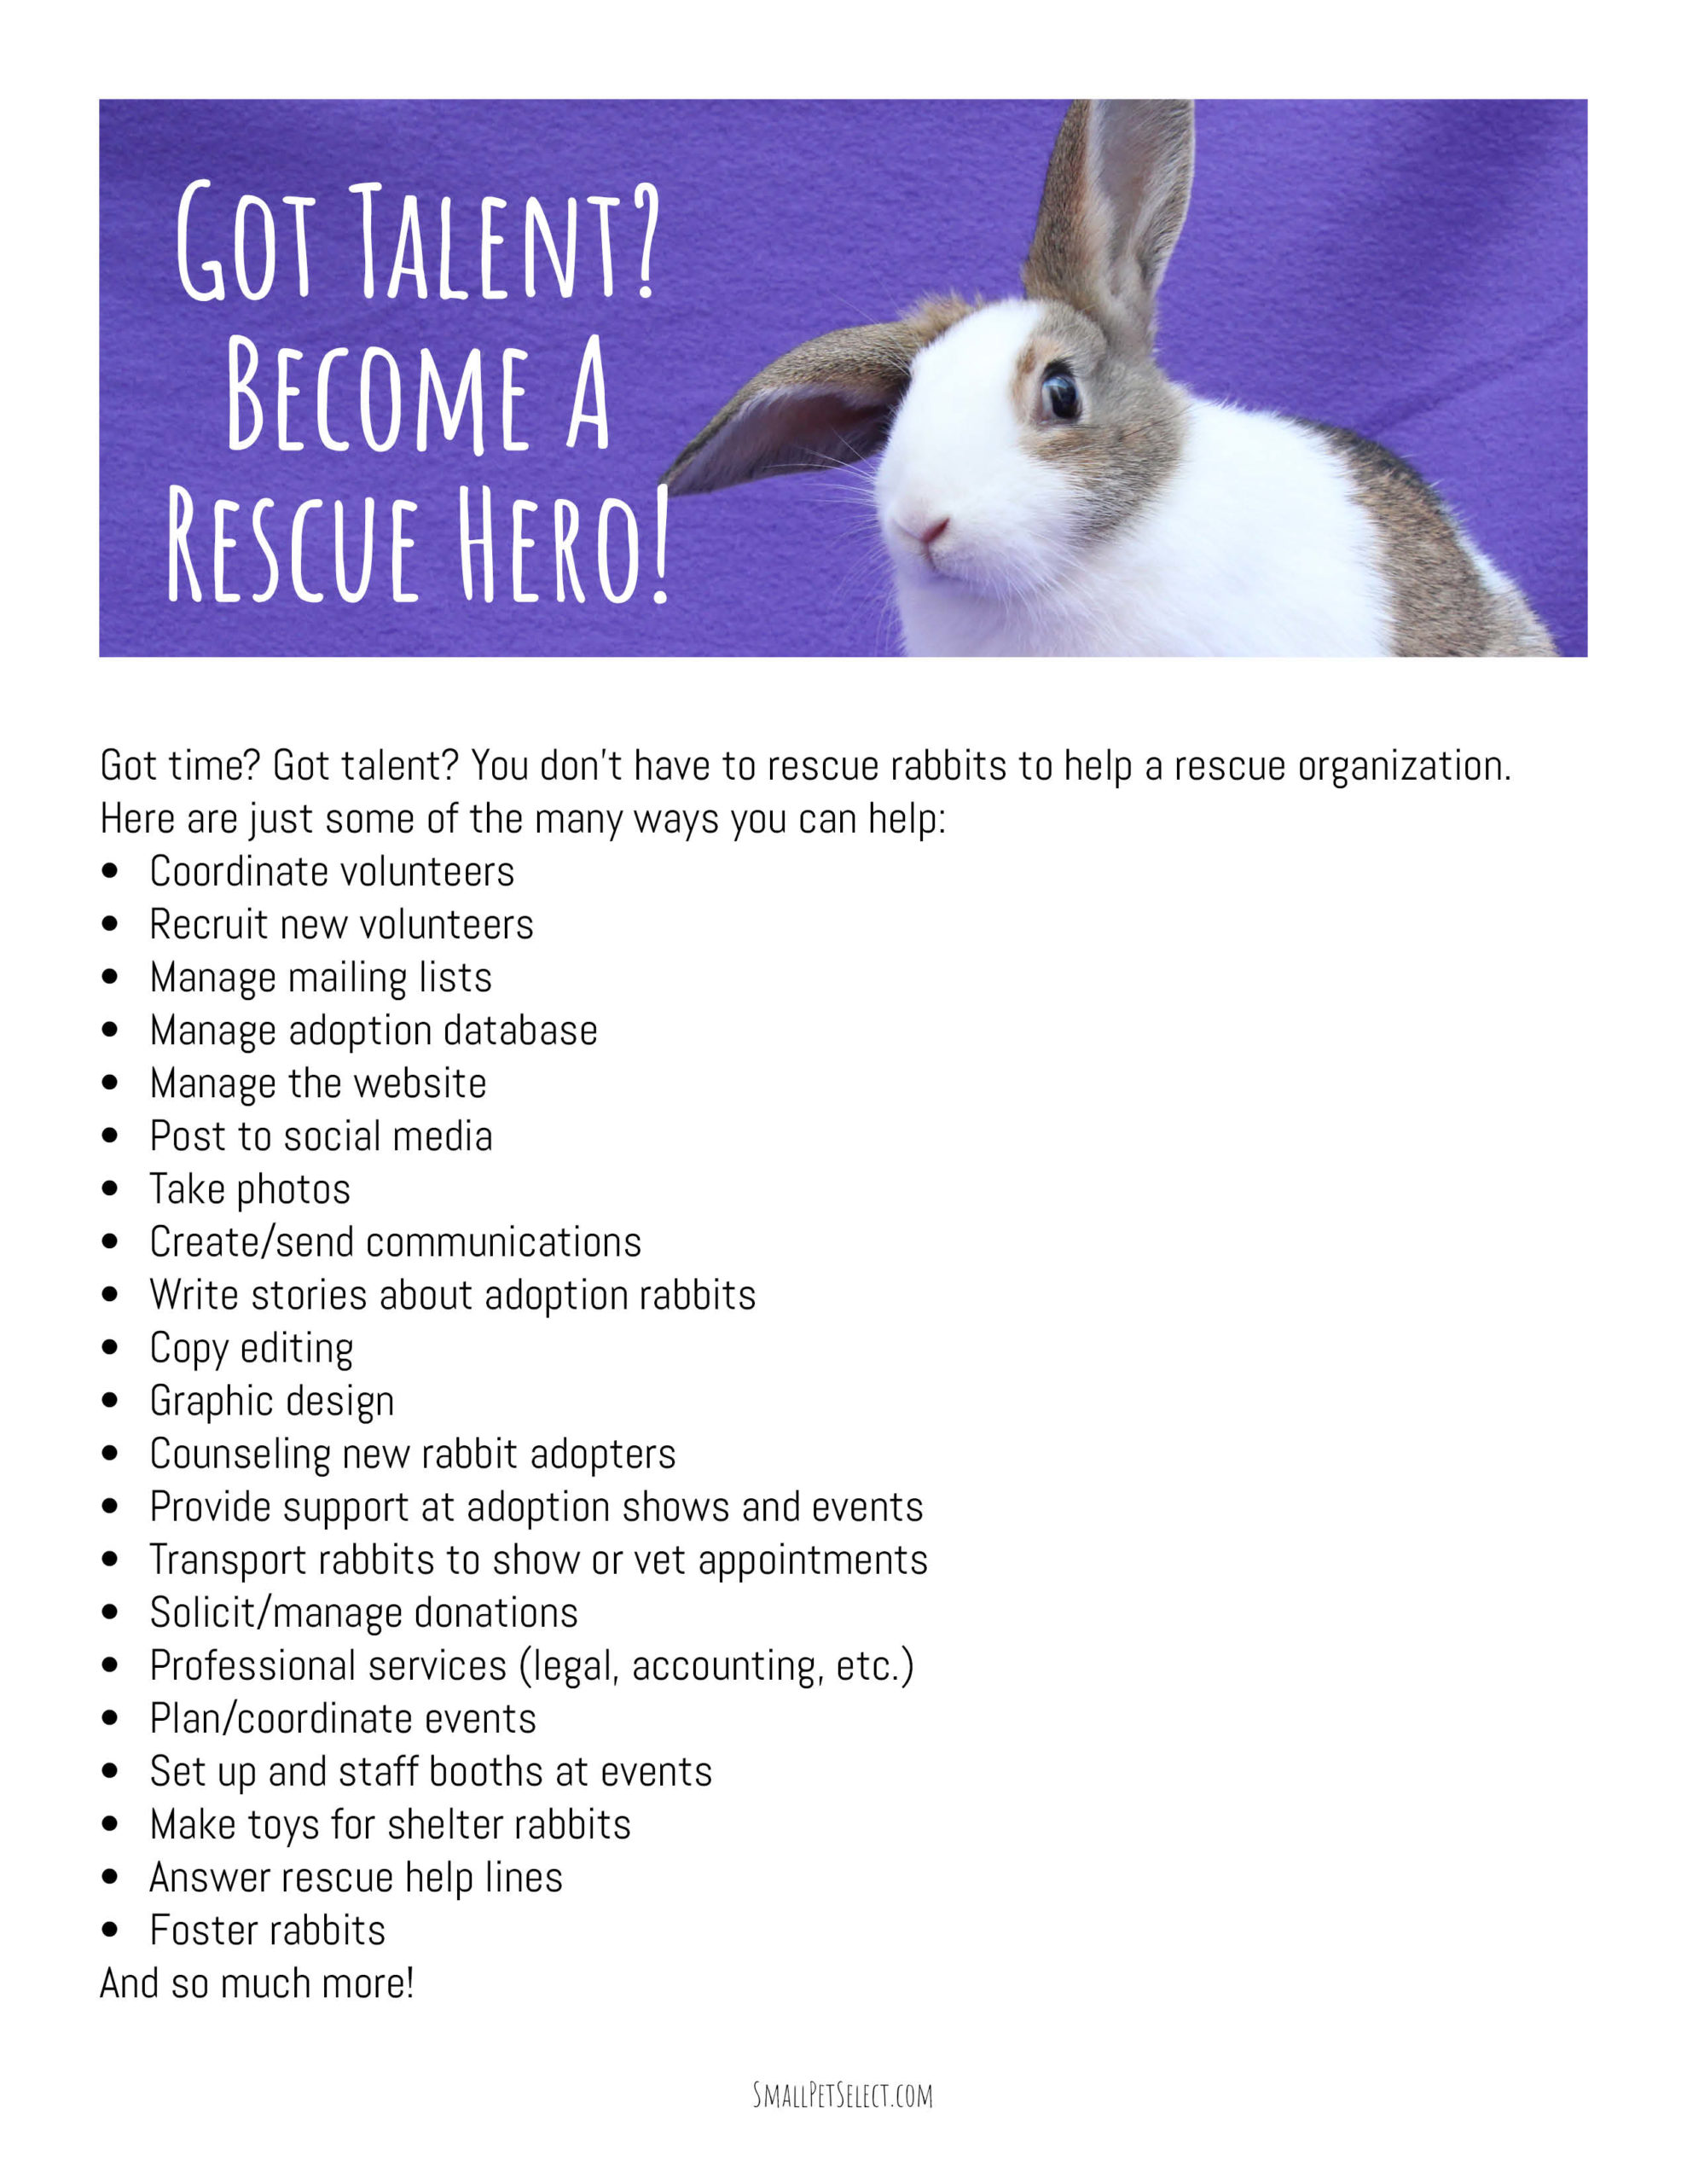 Become a Rescue Hero